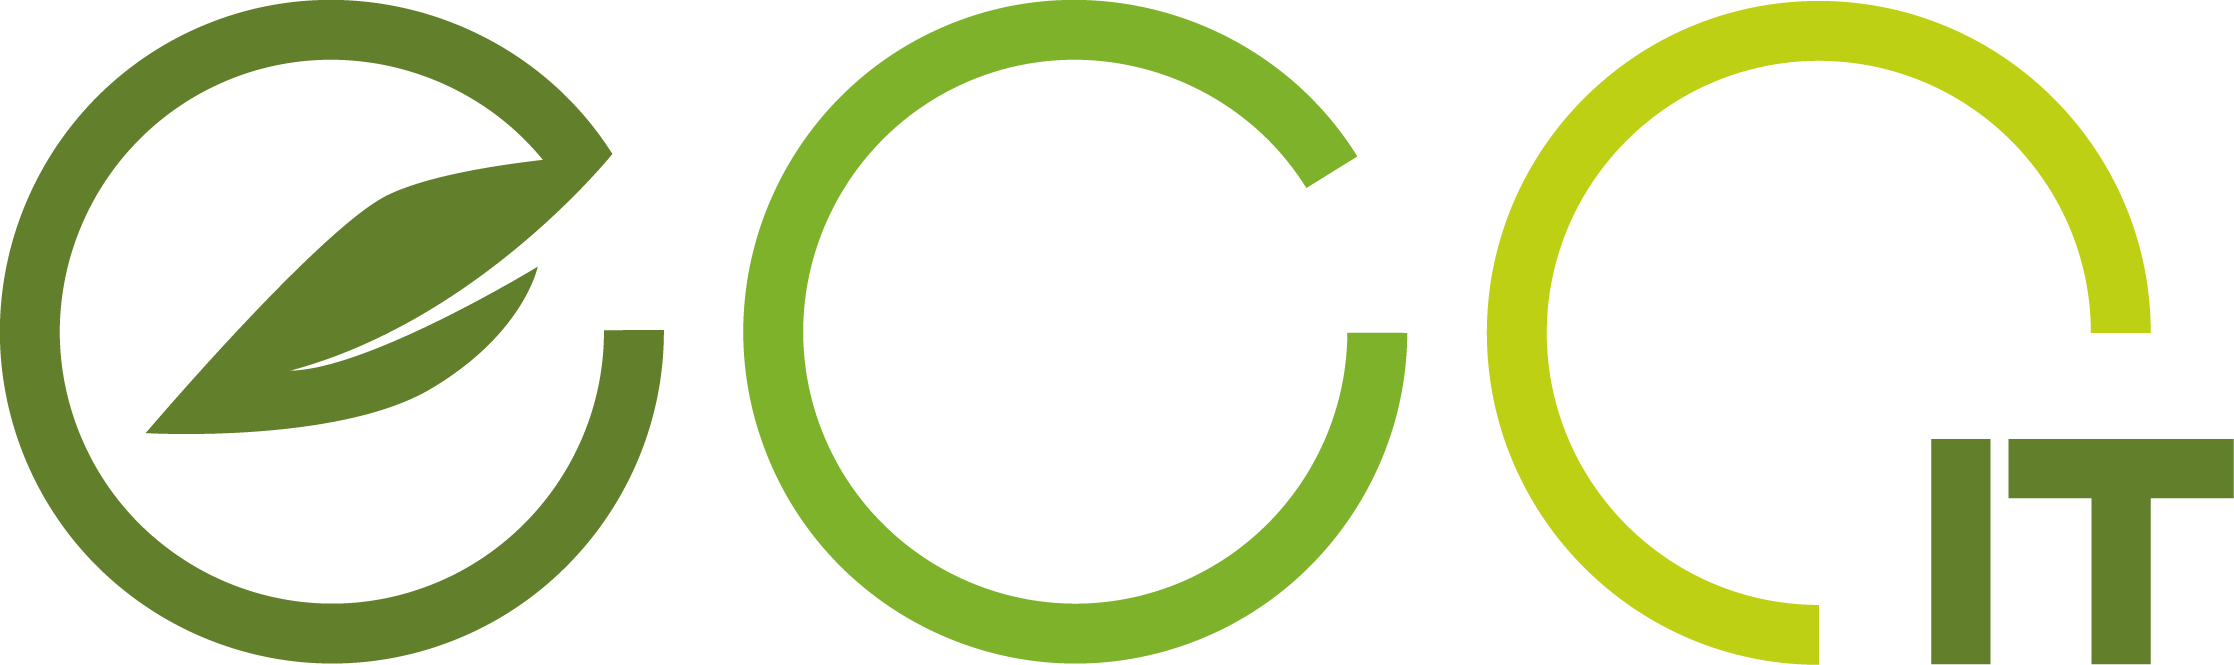 eco IT GmbH Logo